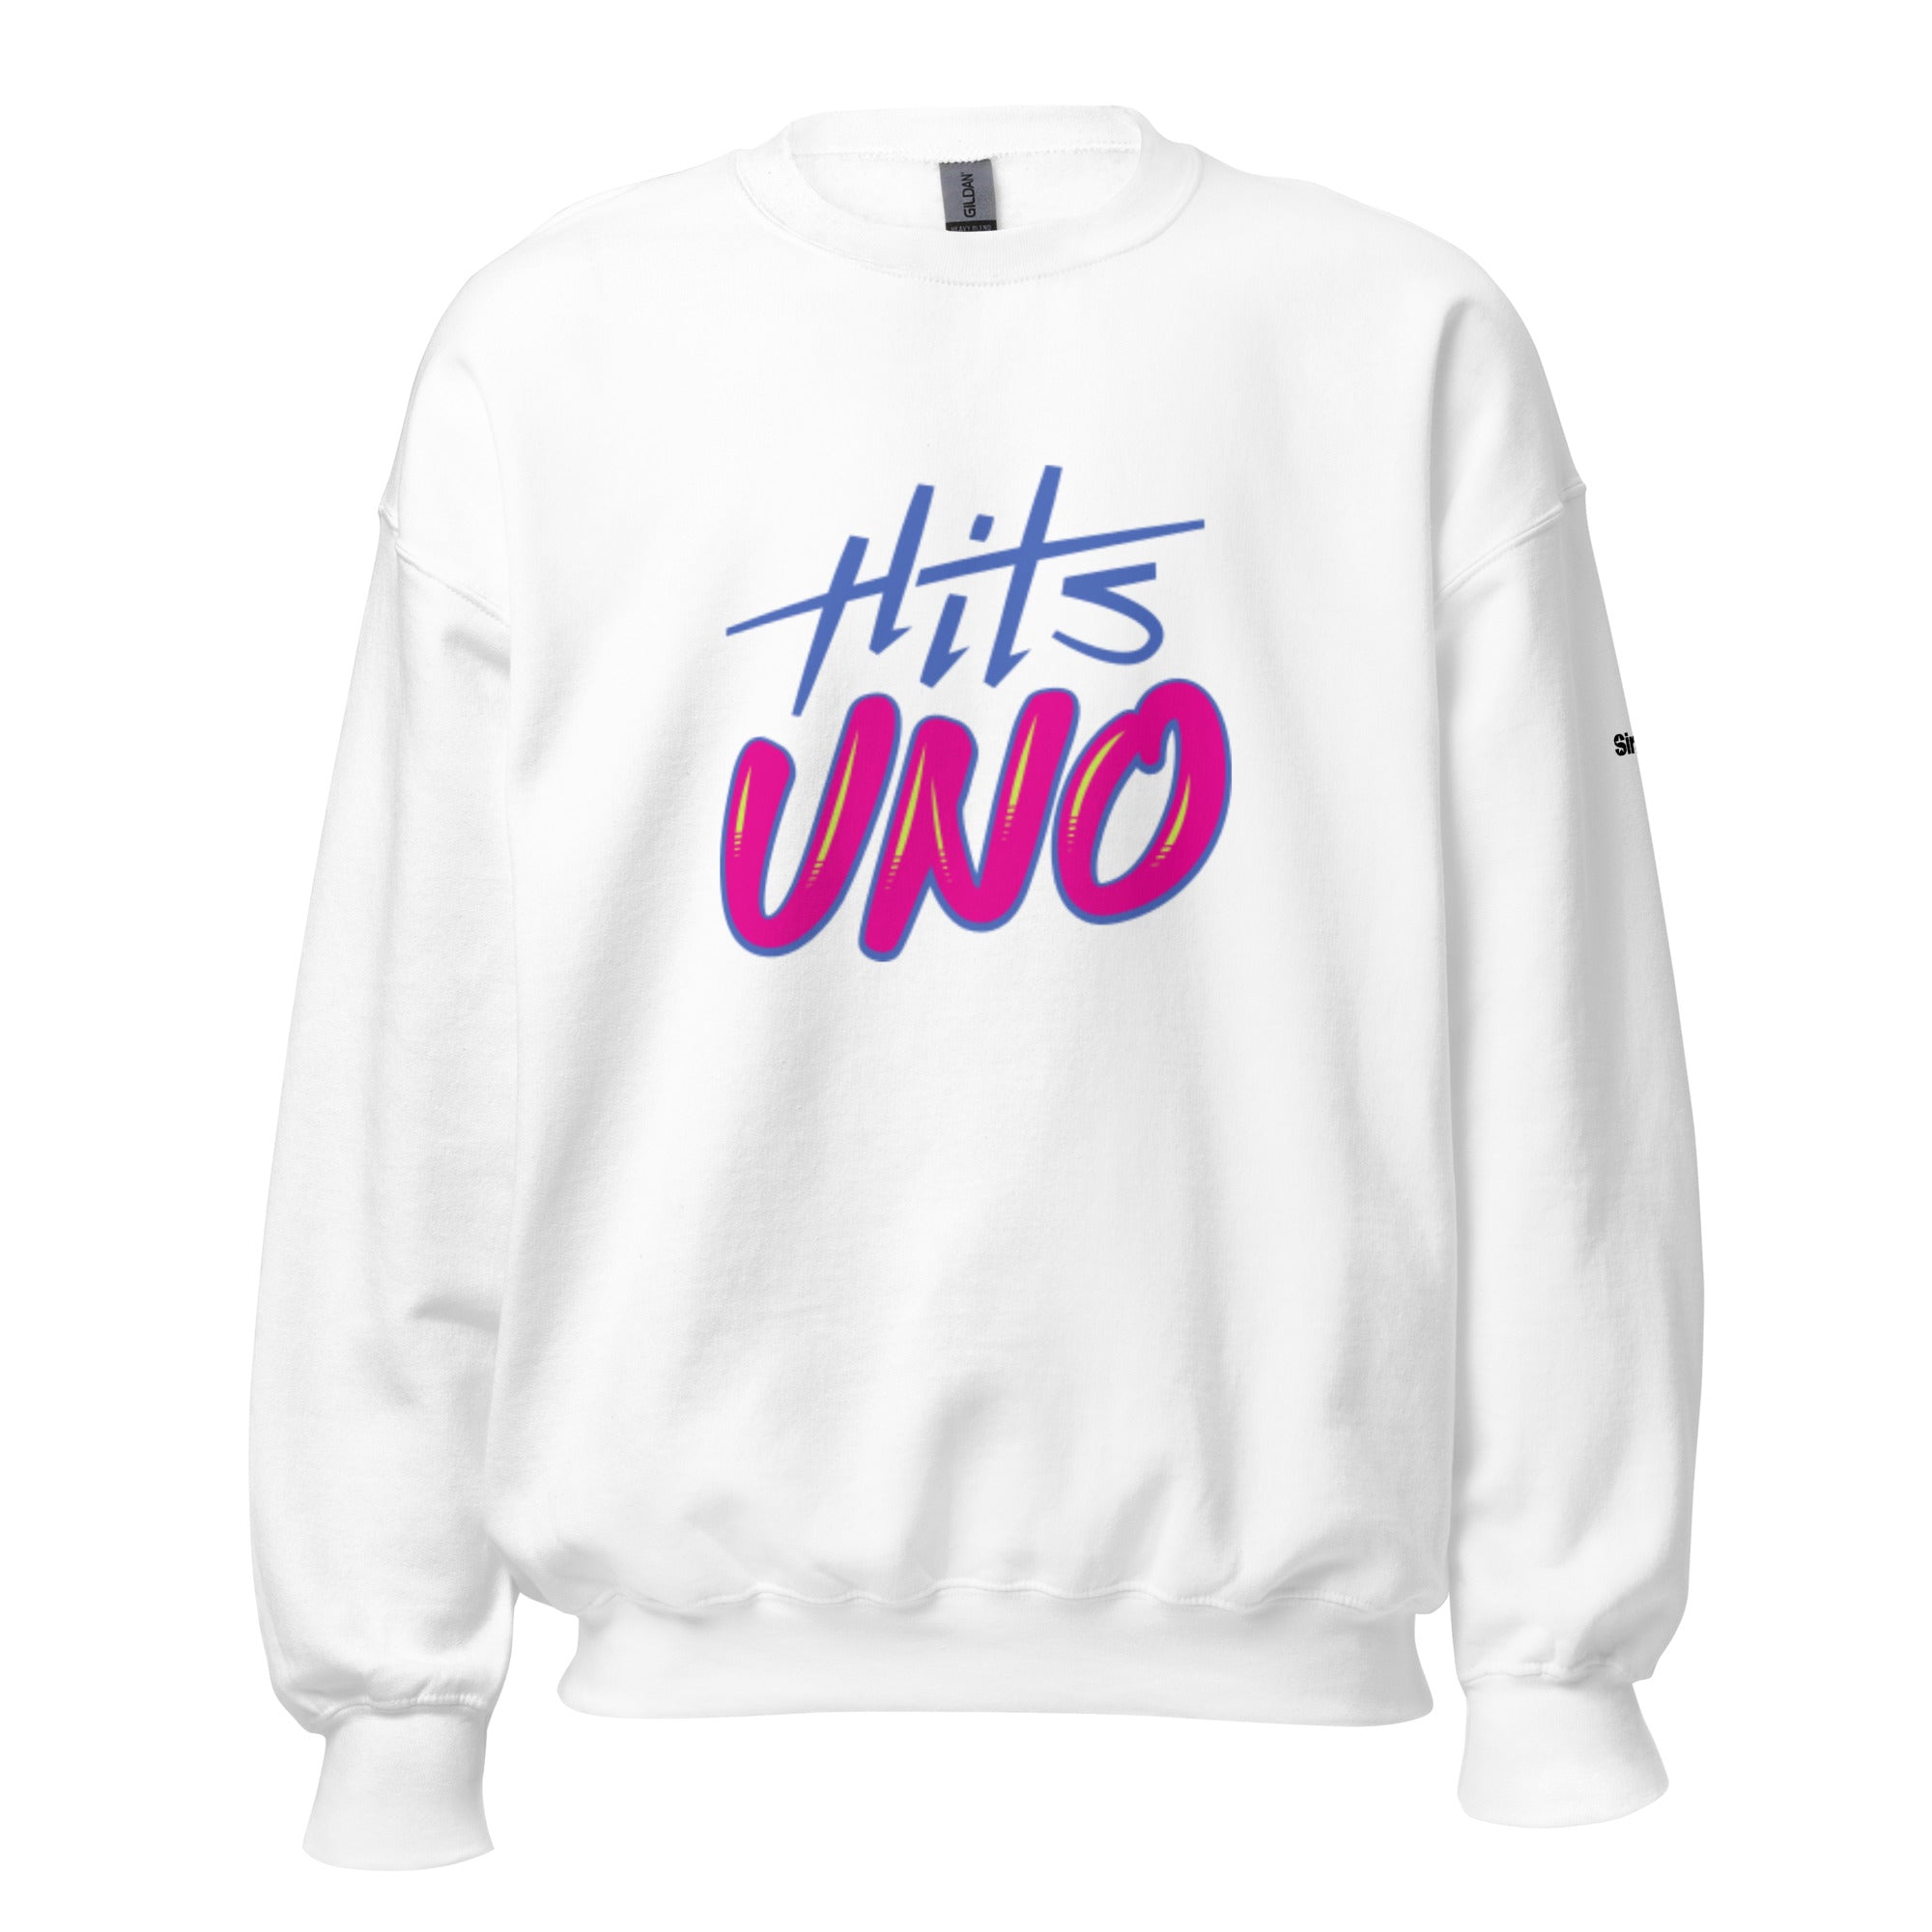 Hits Uno: White Sweatshirt